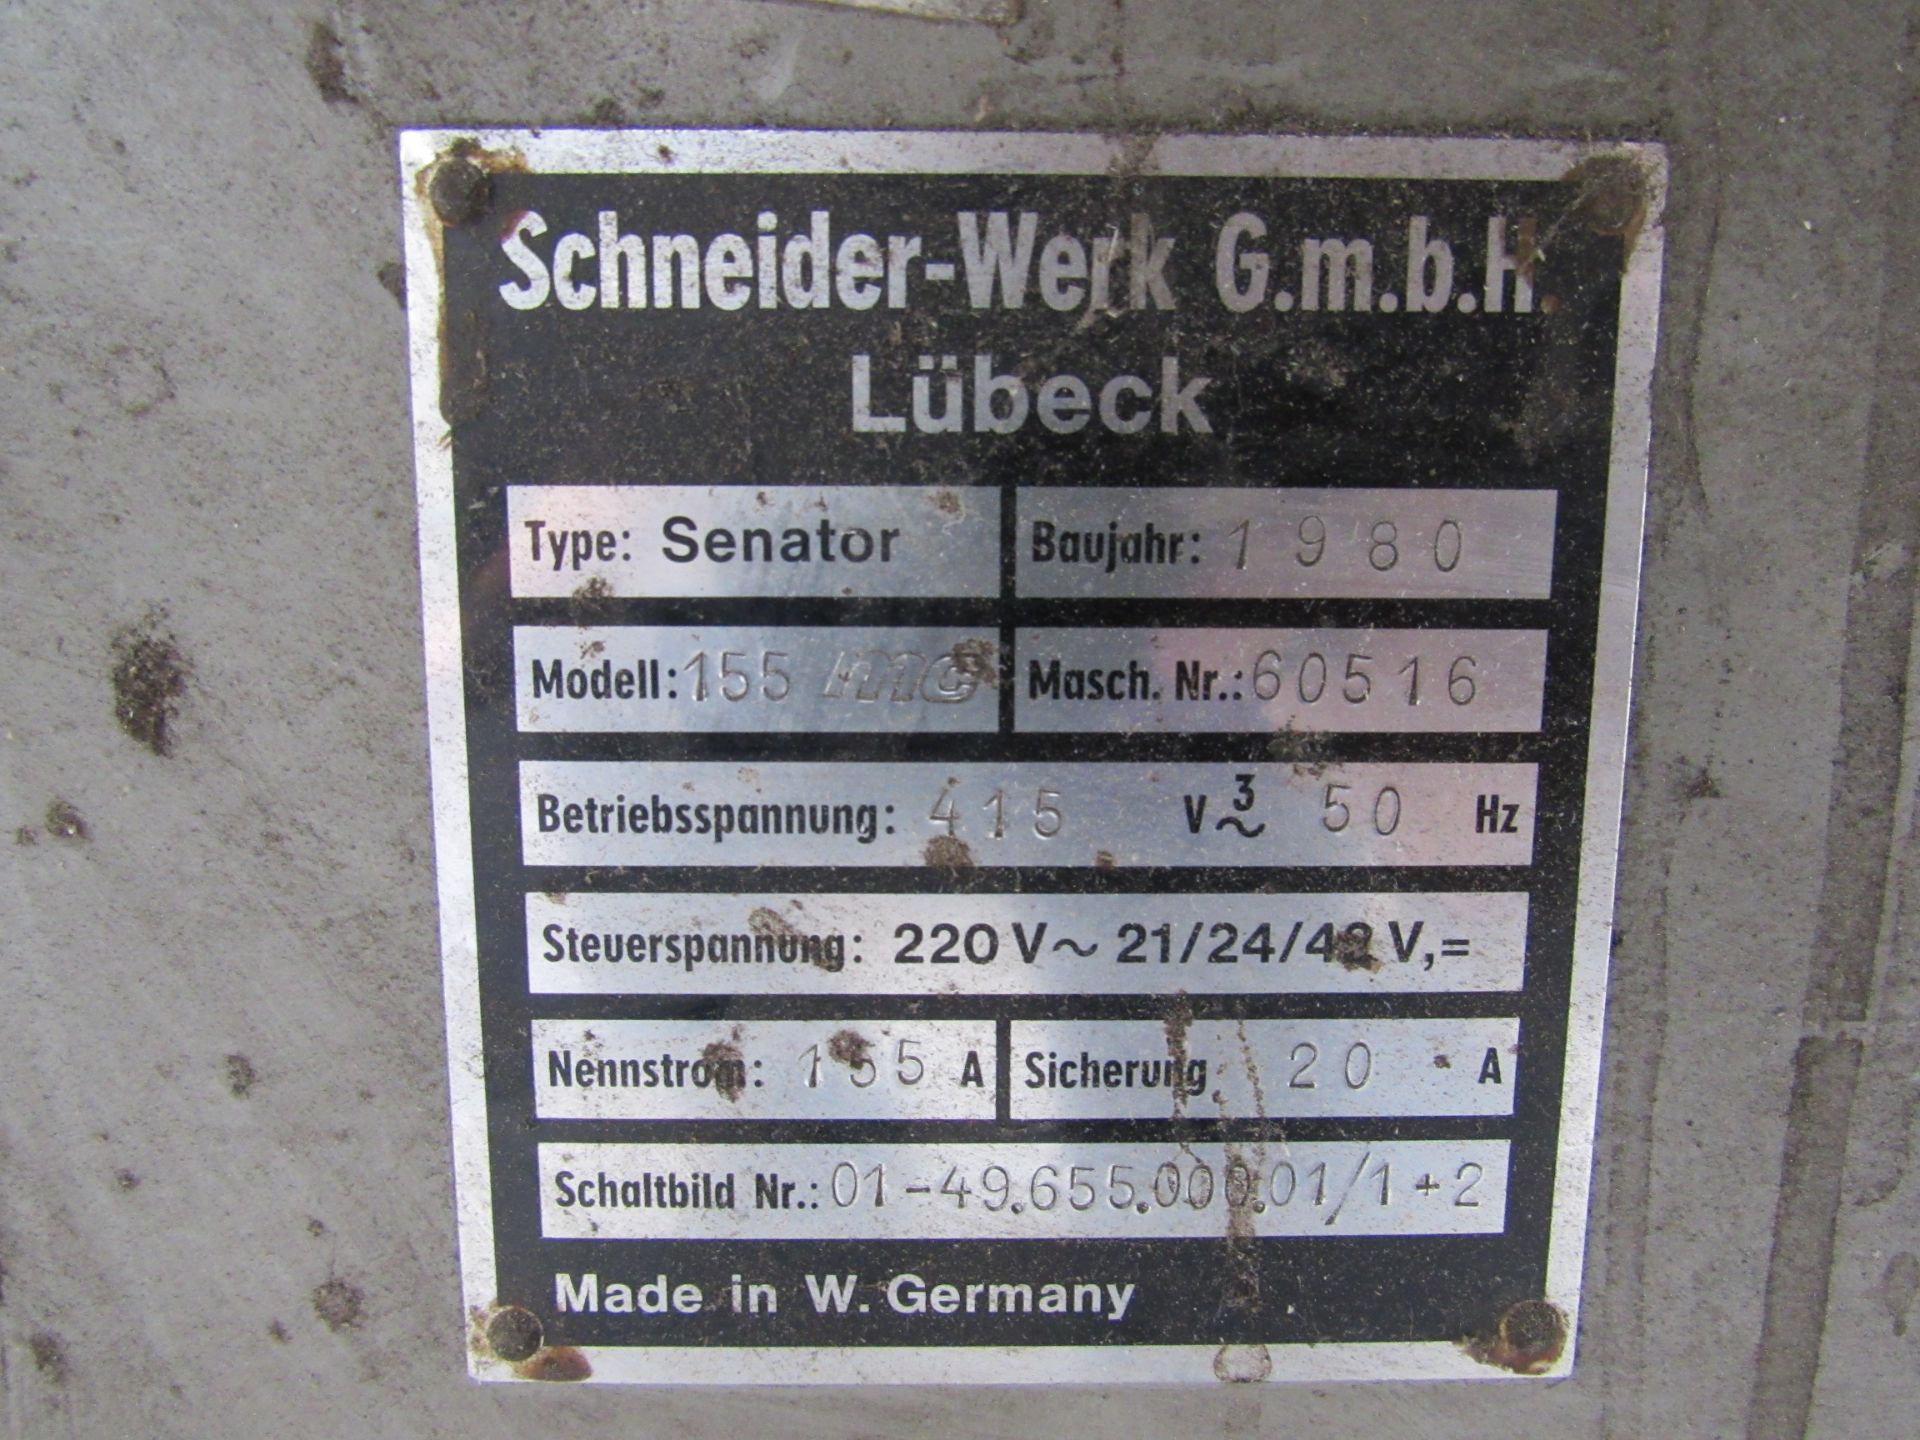 Schneider Senator MC155 guillotine 1980, Serial Number 60516 - Image 5 of 6